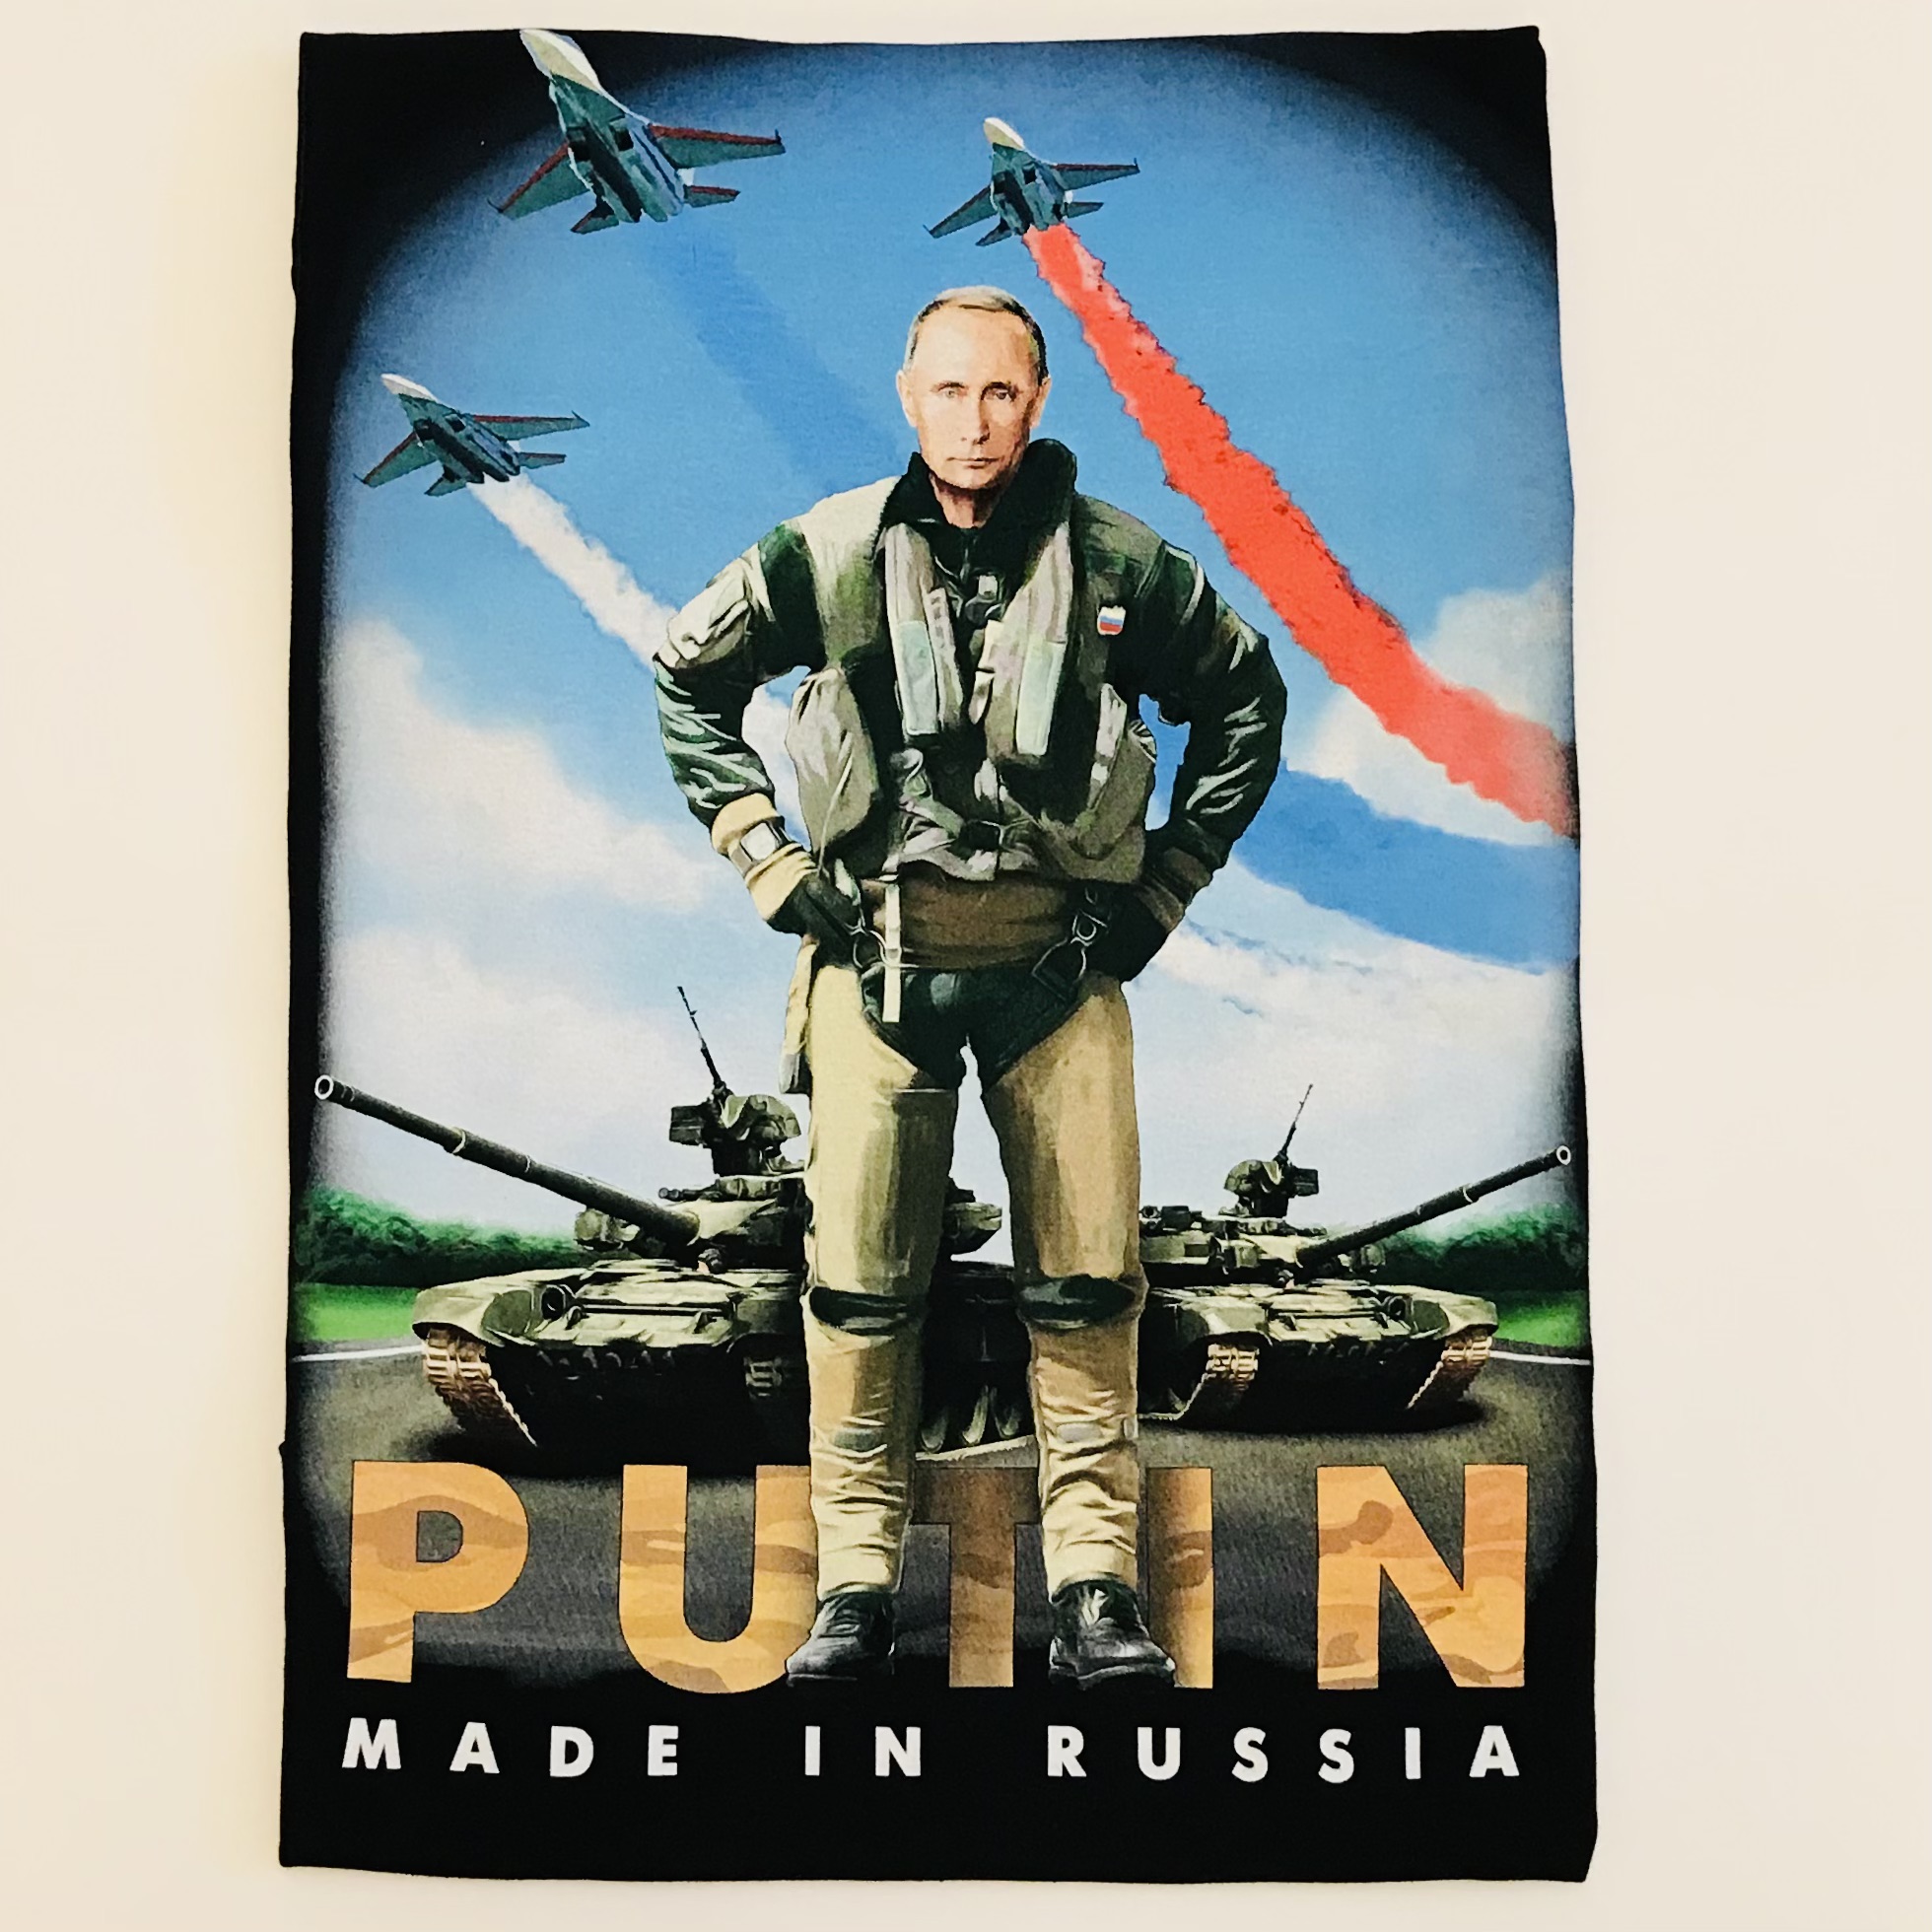 Футболка сувенирная "Putin made in Russia"